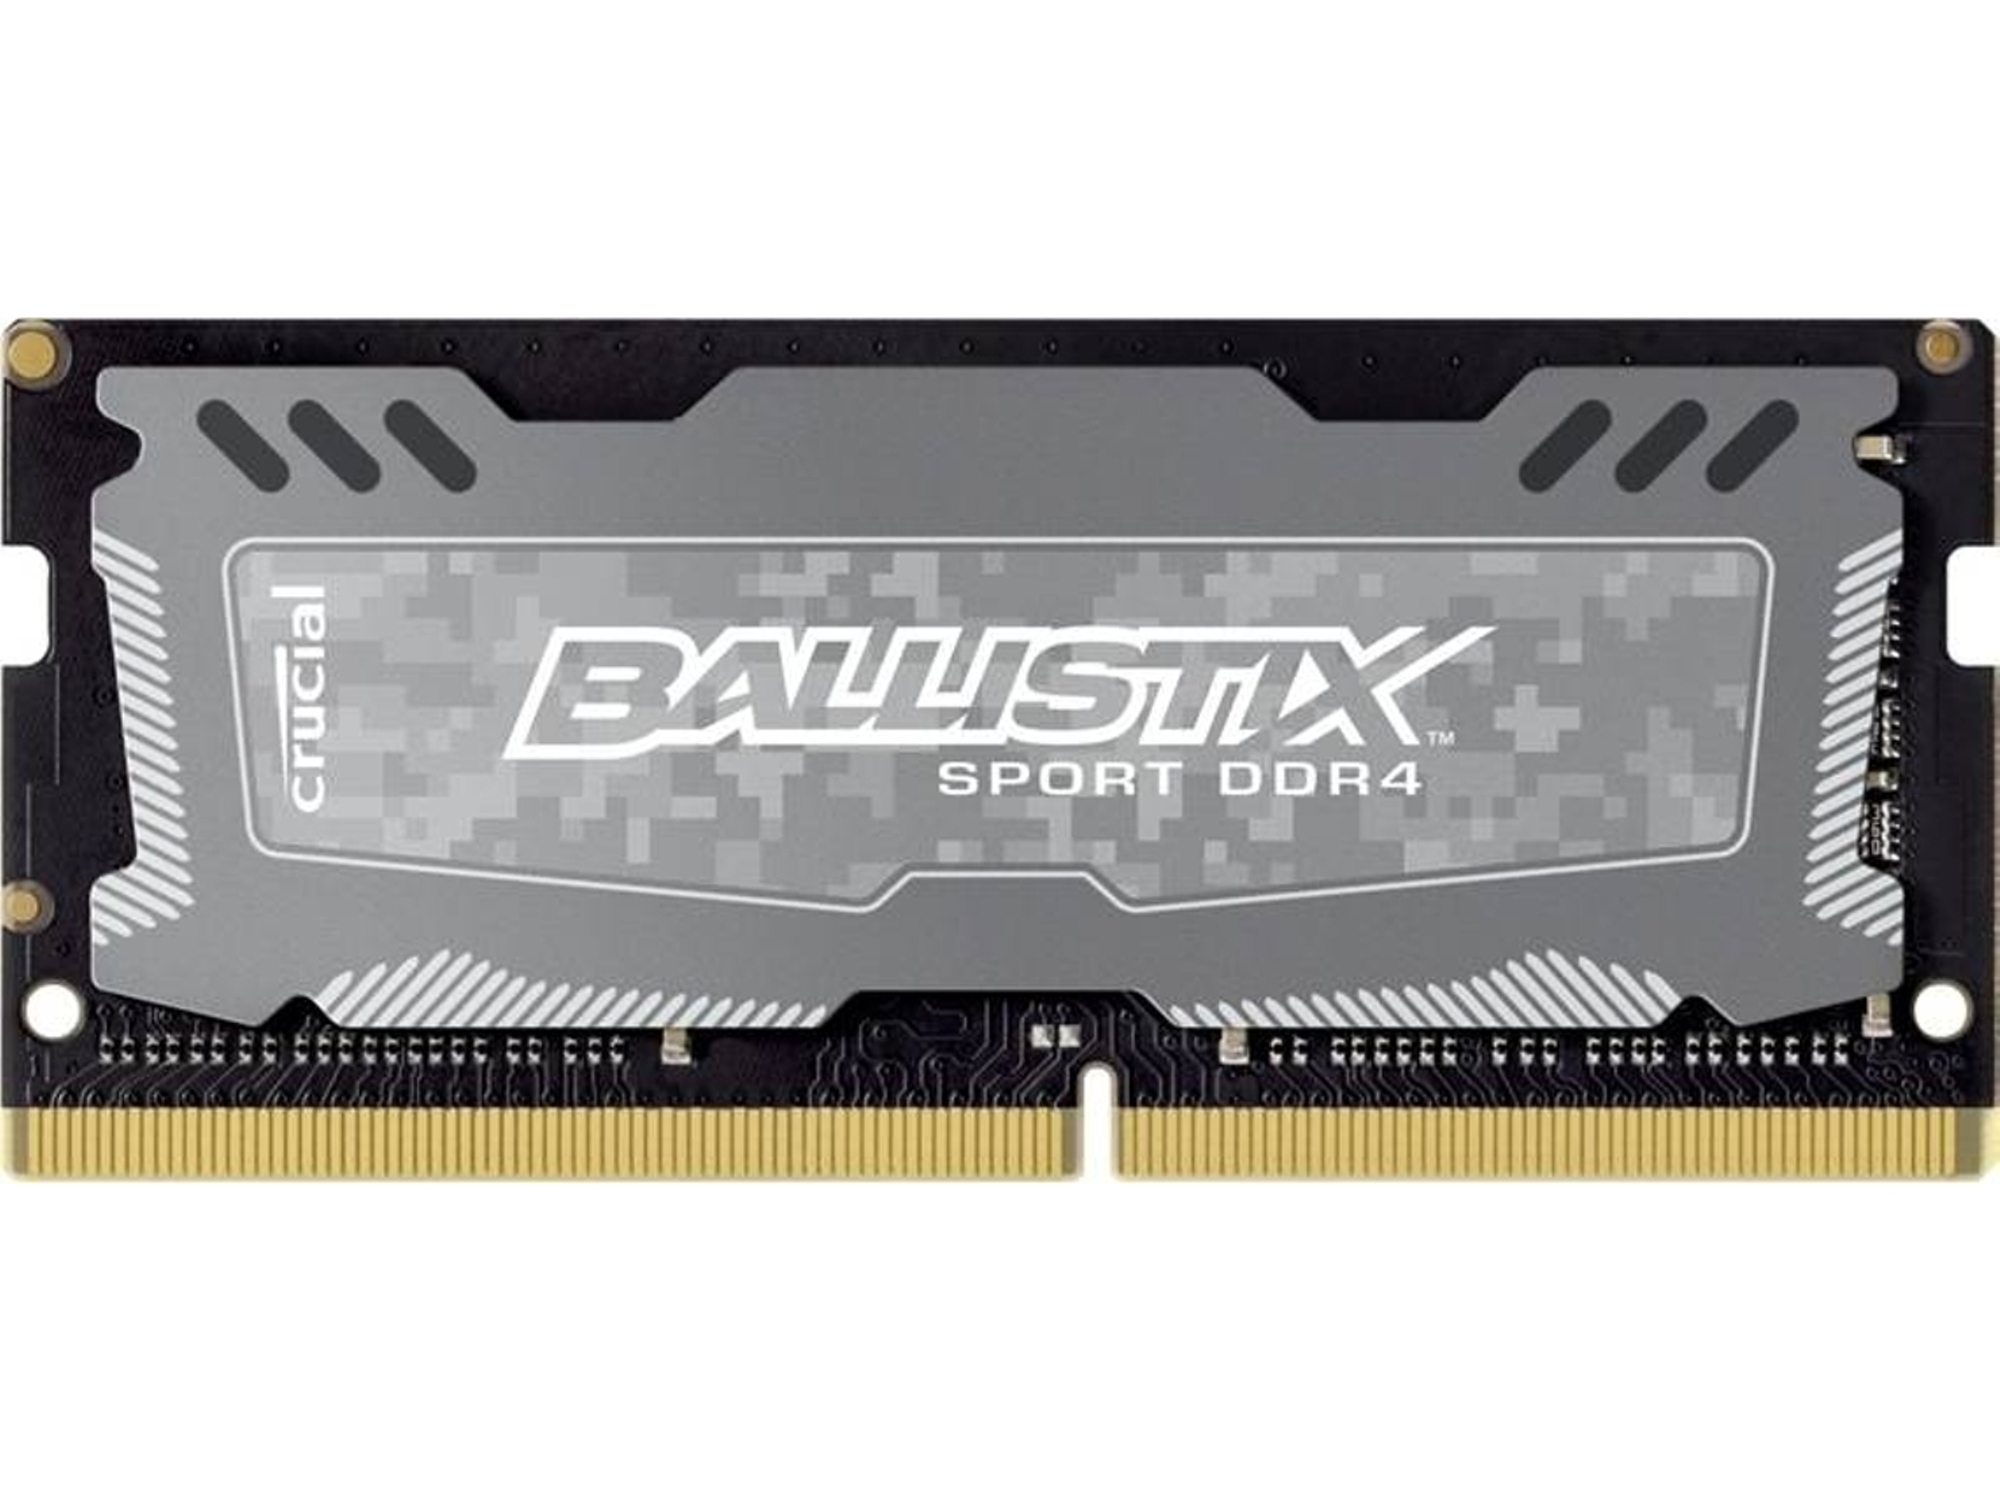 Memoria RAM DDR4 BALLISTIX Ballistix (1 x 8 GB - 2400 MHz - CL 16 - Gris)